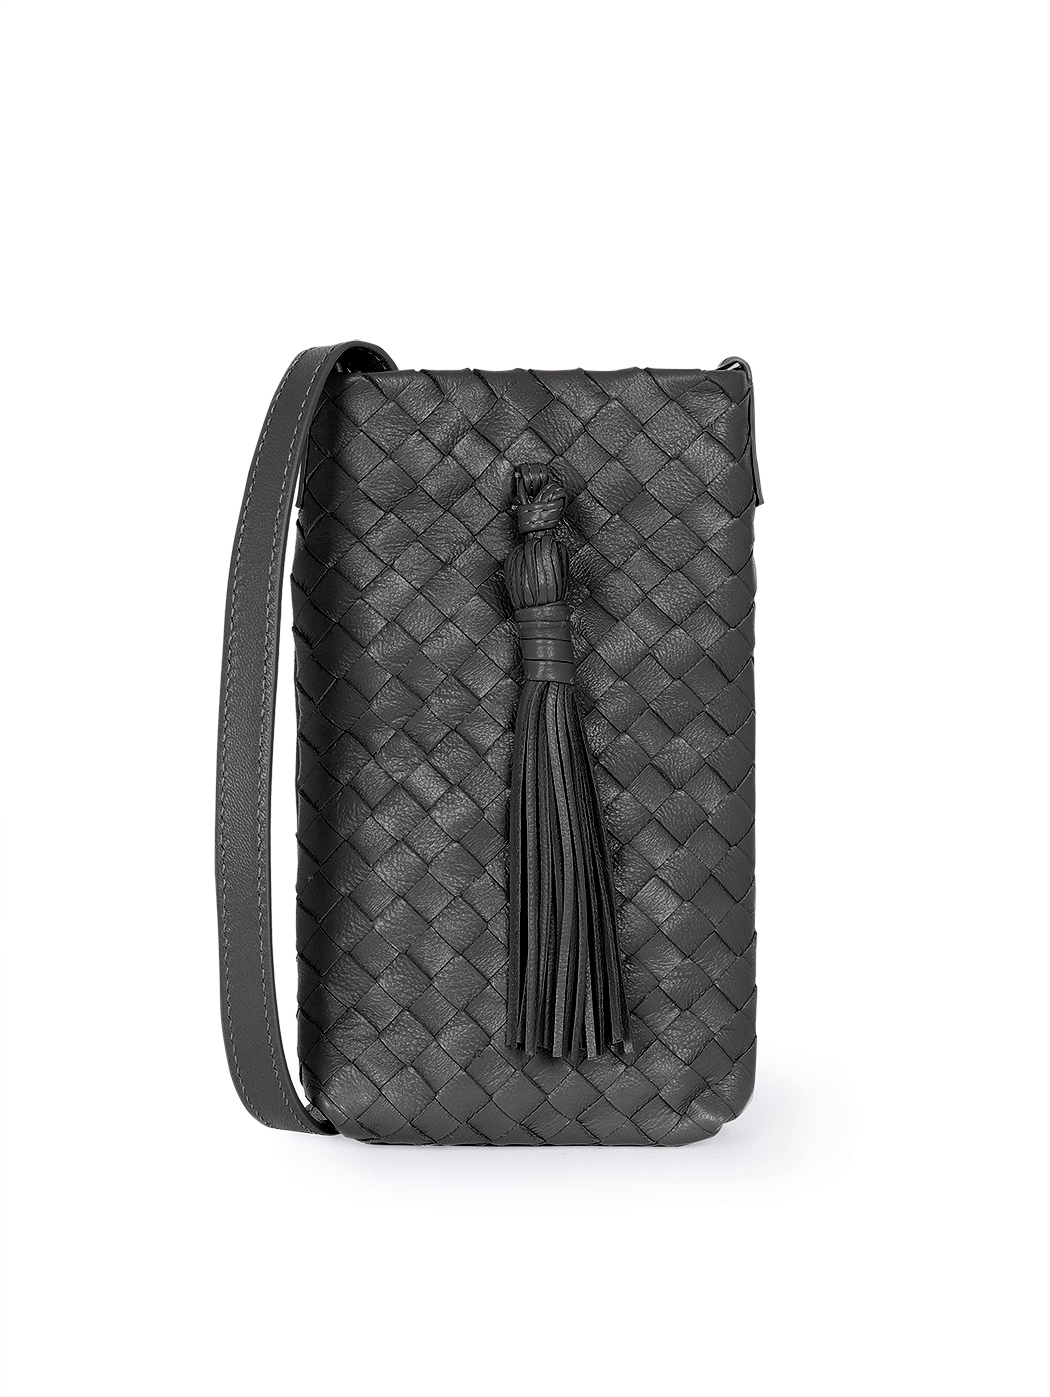 Crossbody Phone Bag Woven Leather Black